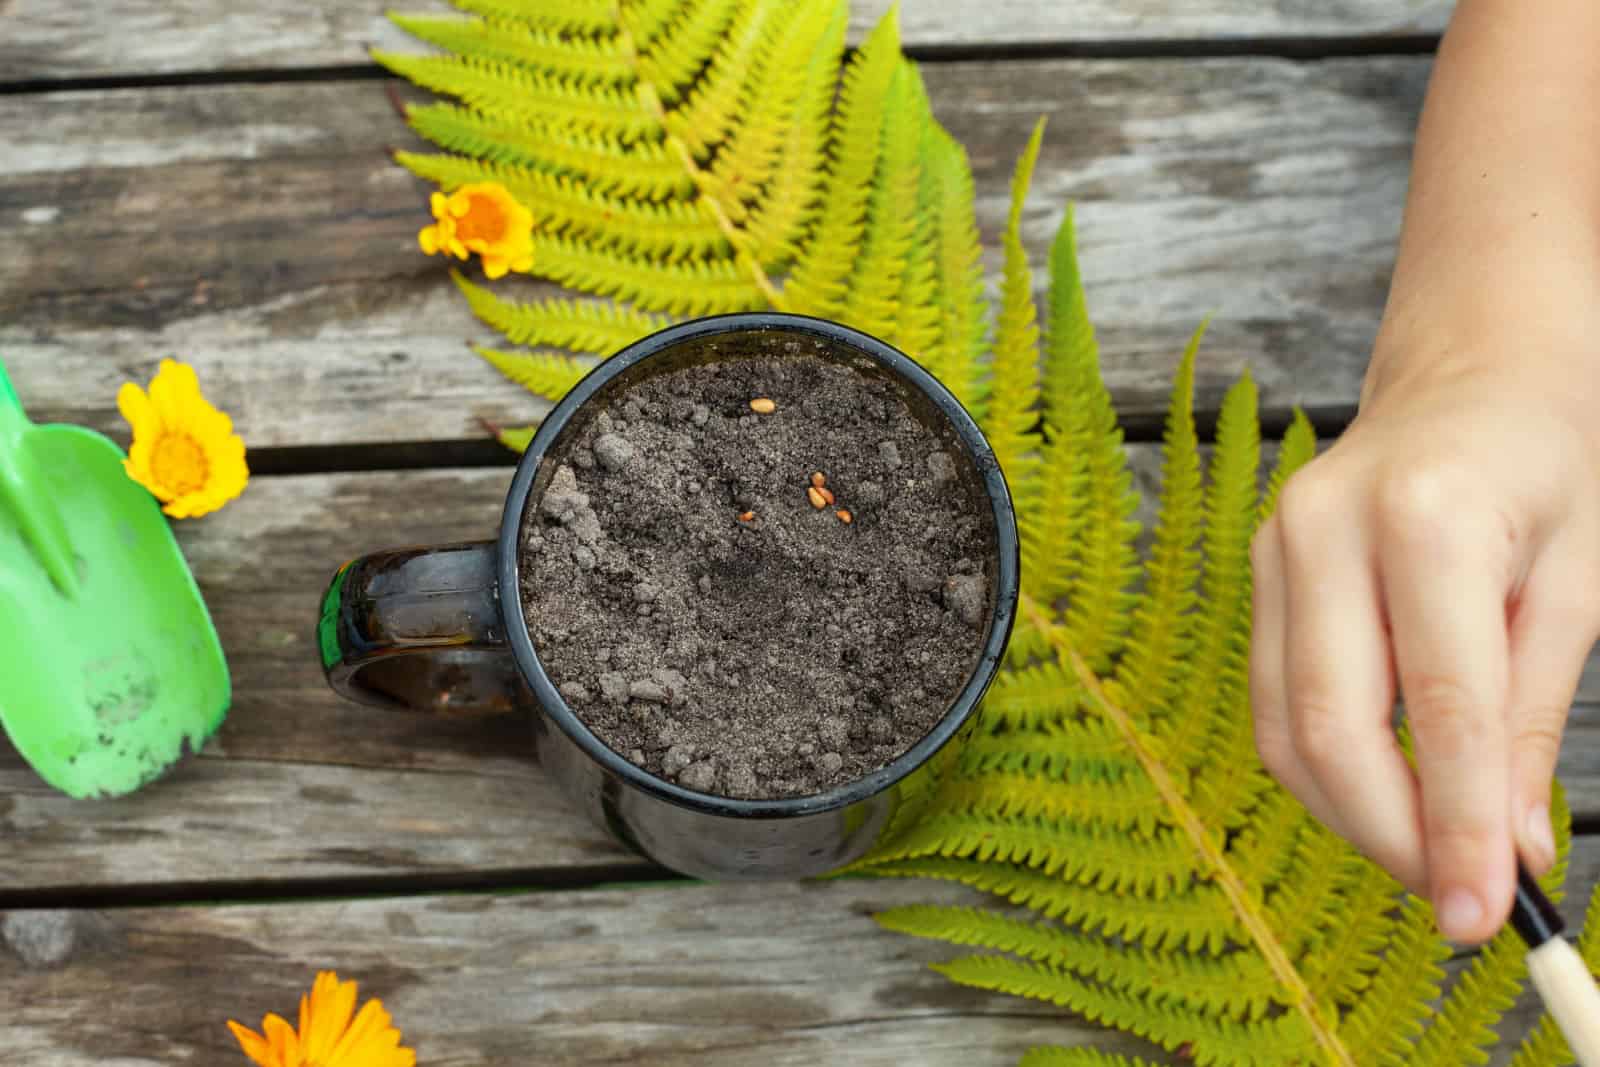 children's hands plant seeds in a flower pot